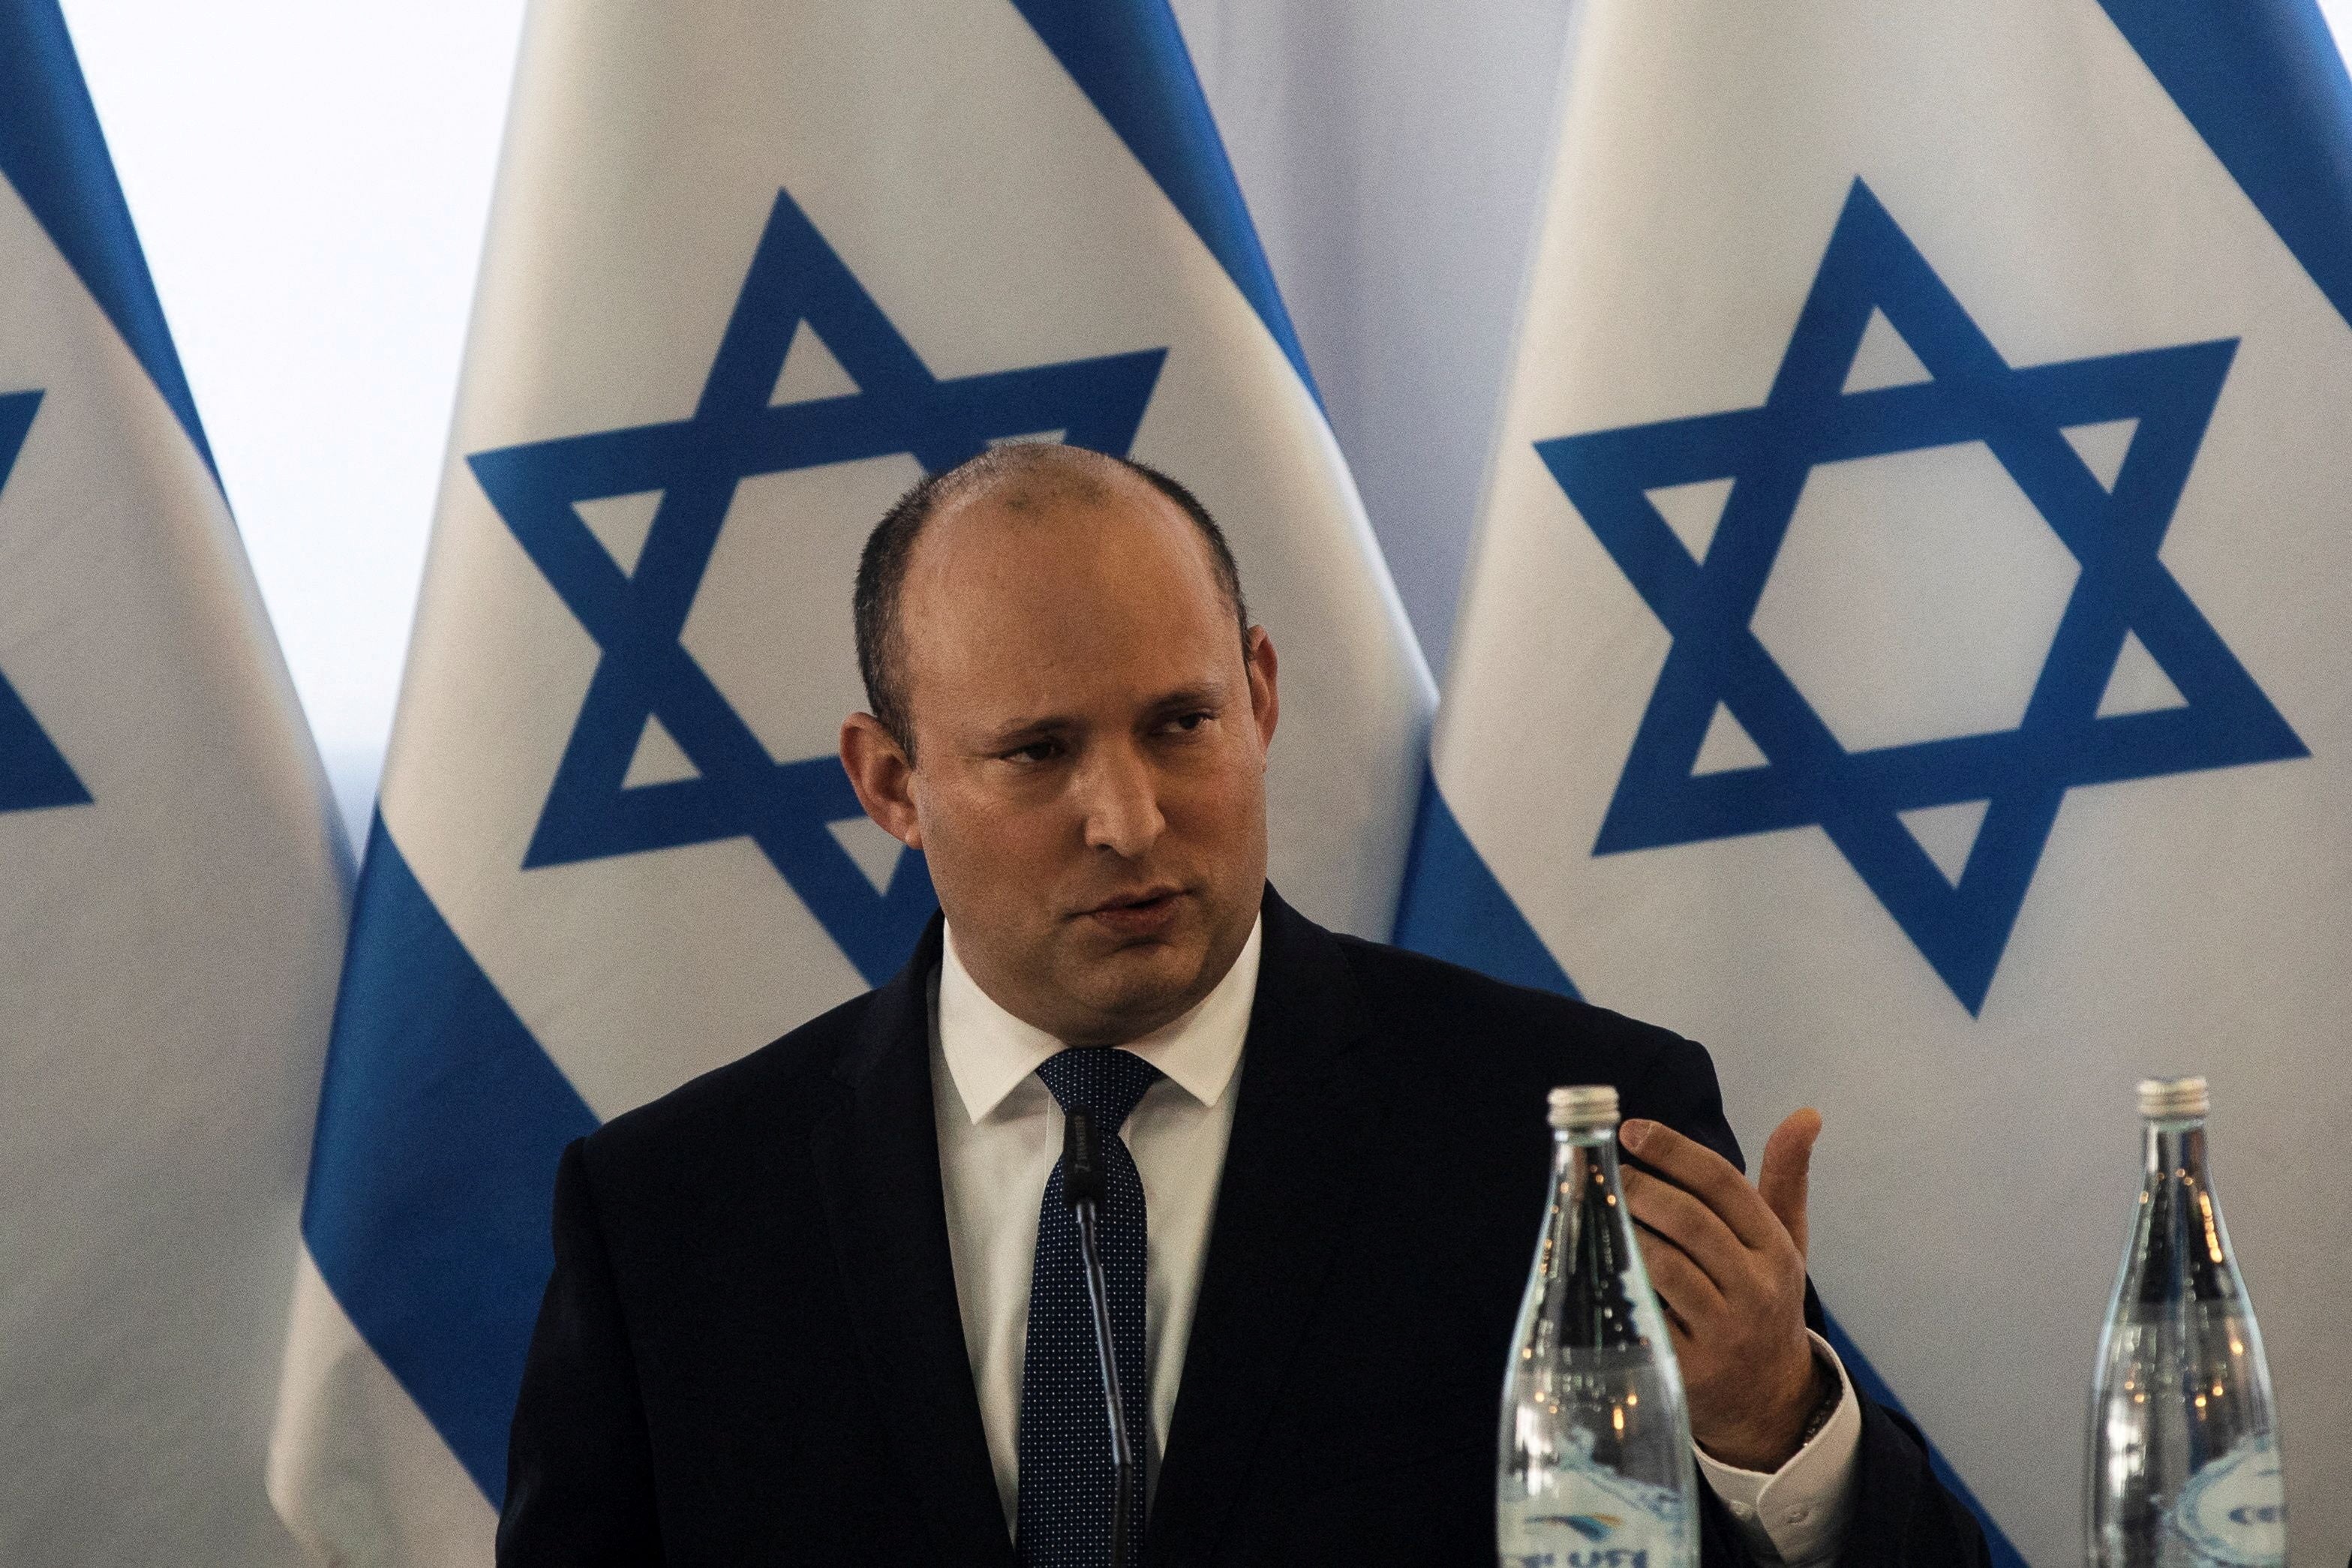 Israeli prime minister Naftali Bennett said his colleague’s comments were ‘shocking'